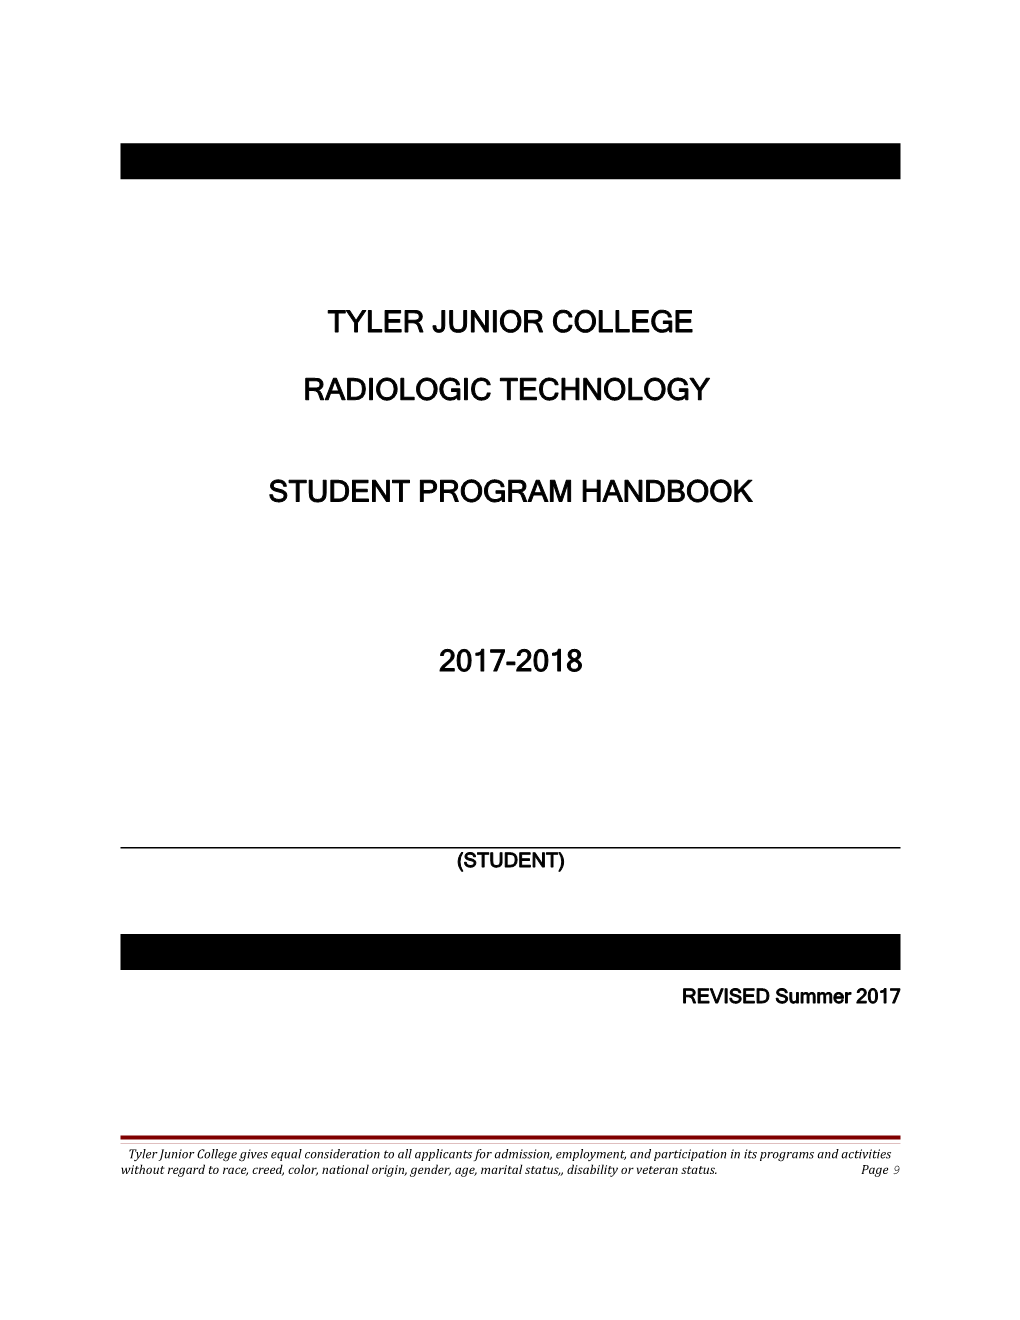 Tyler Junior College * Radiology Technology Program * General Section